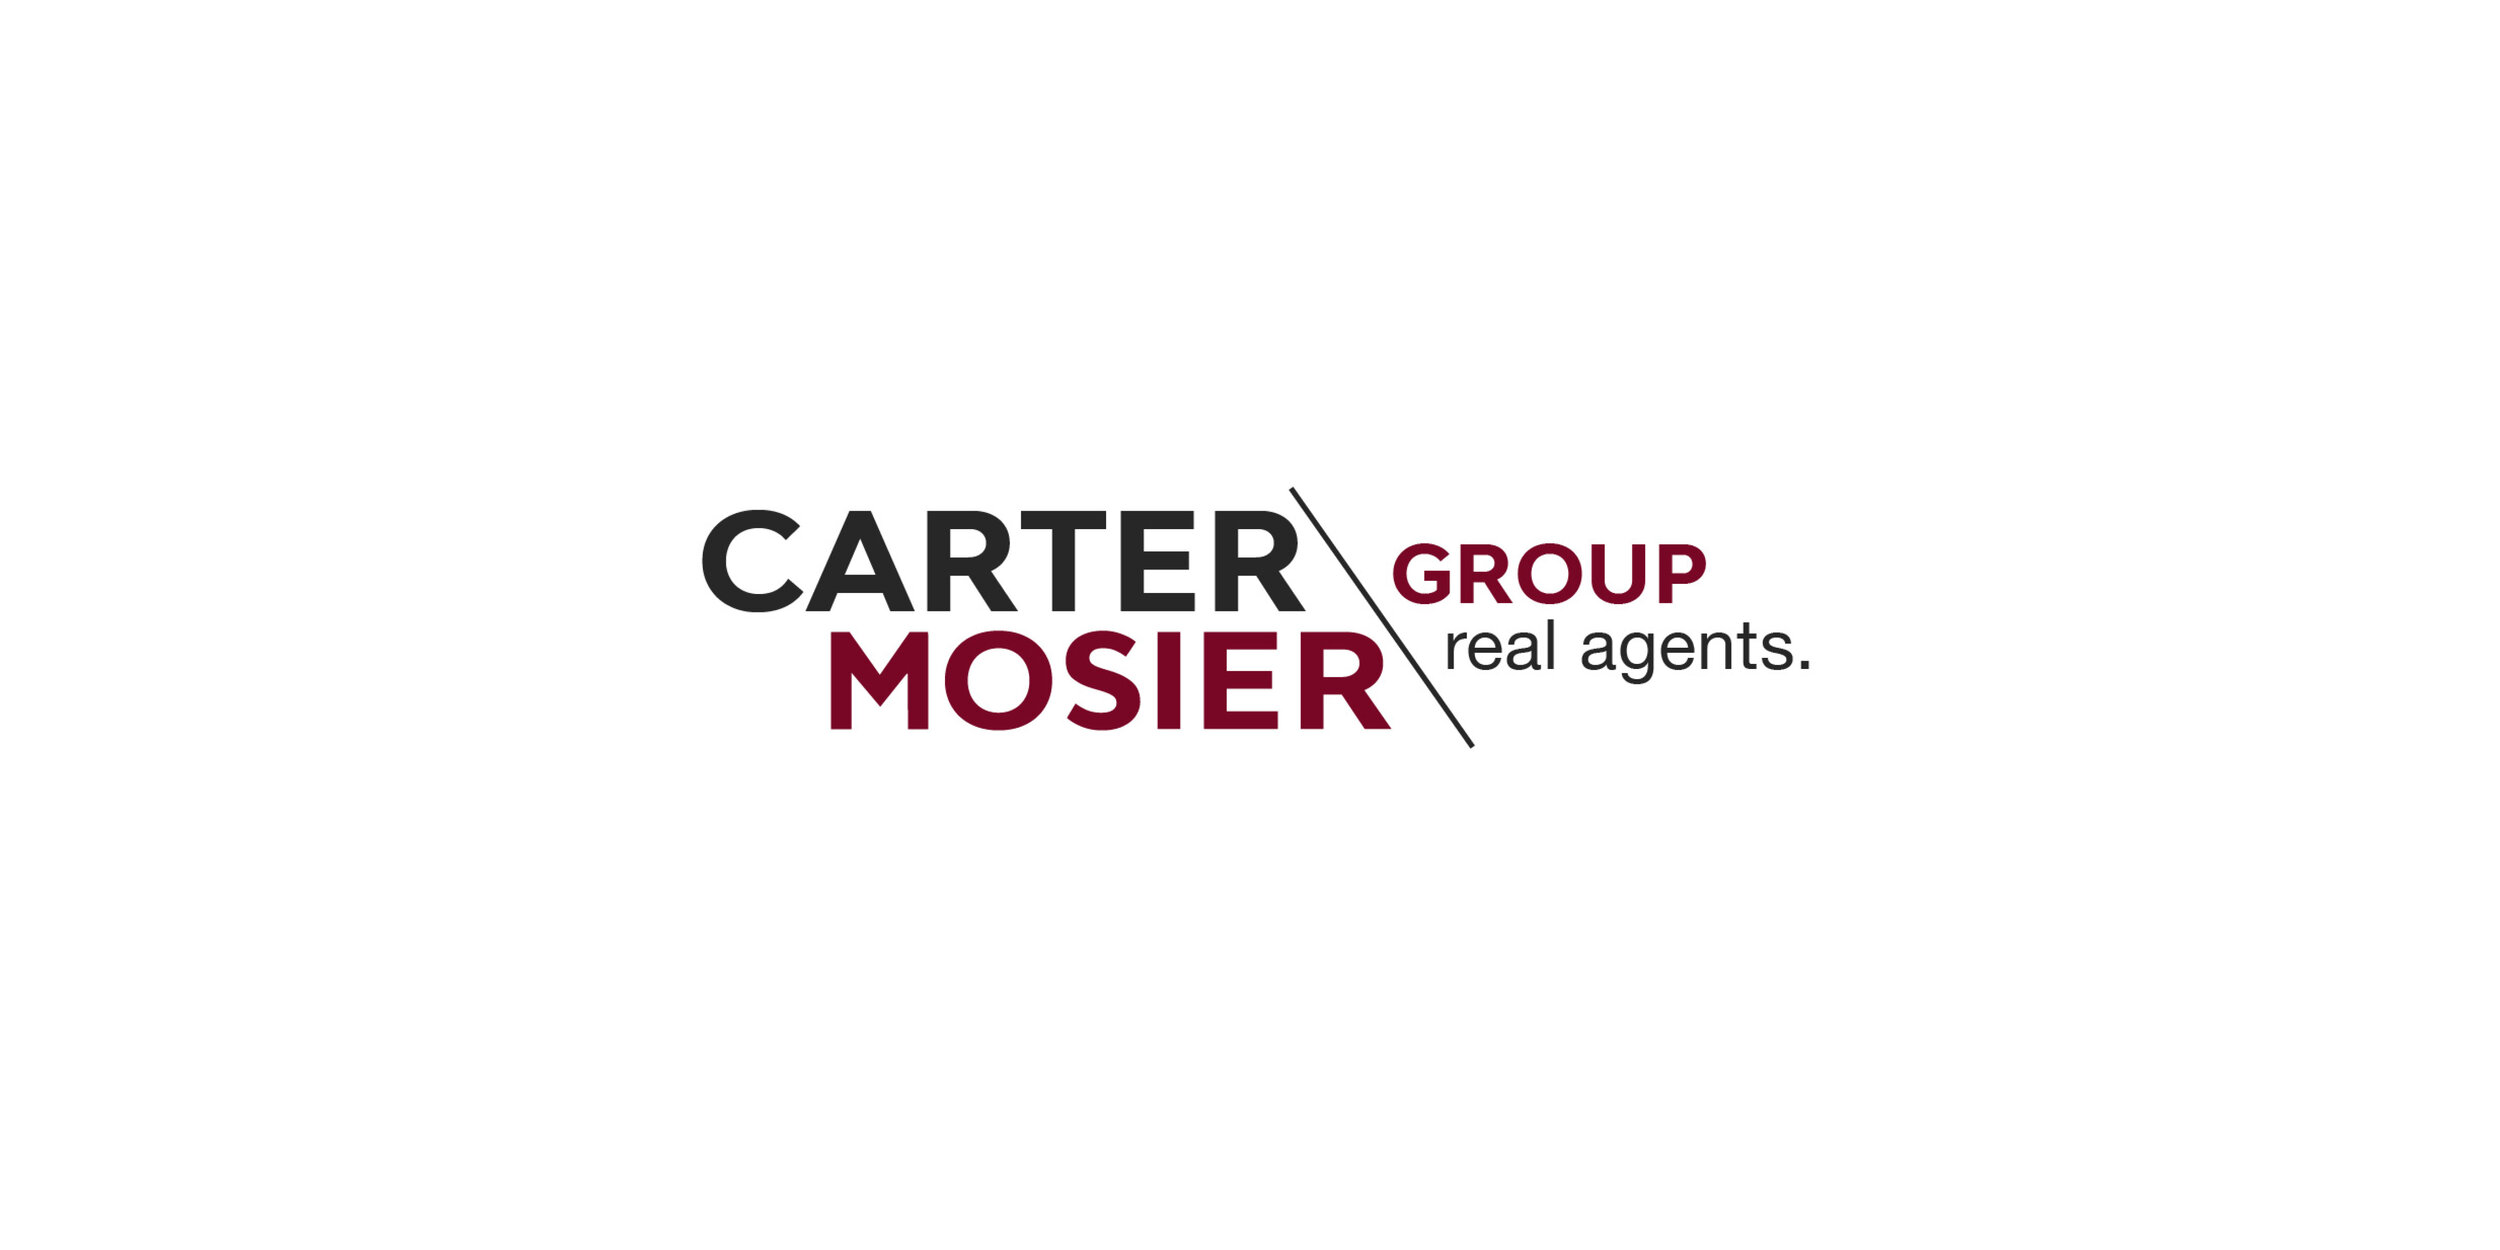 Carter Mosier Group